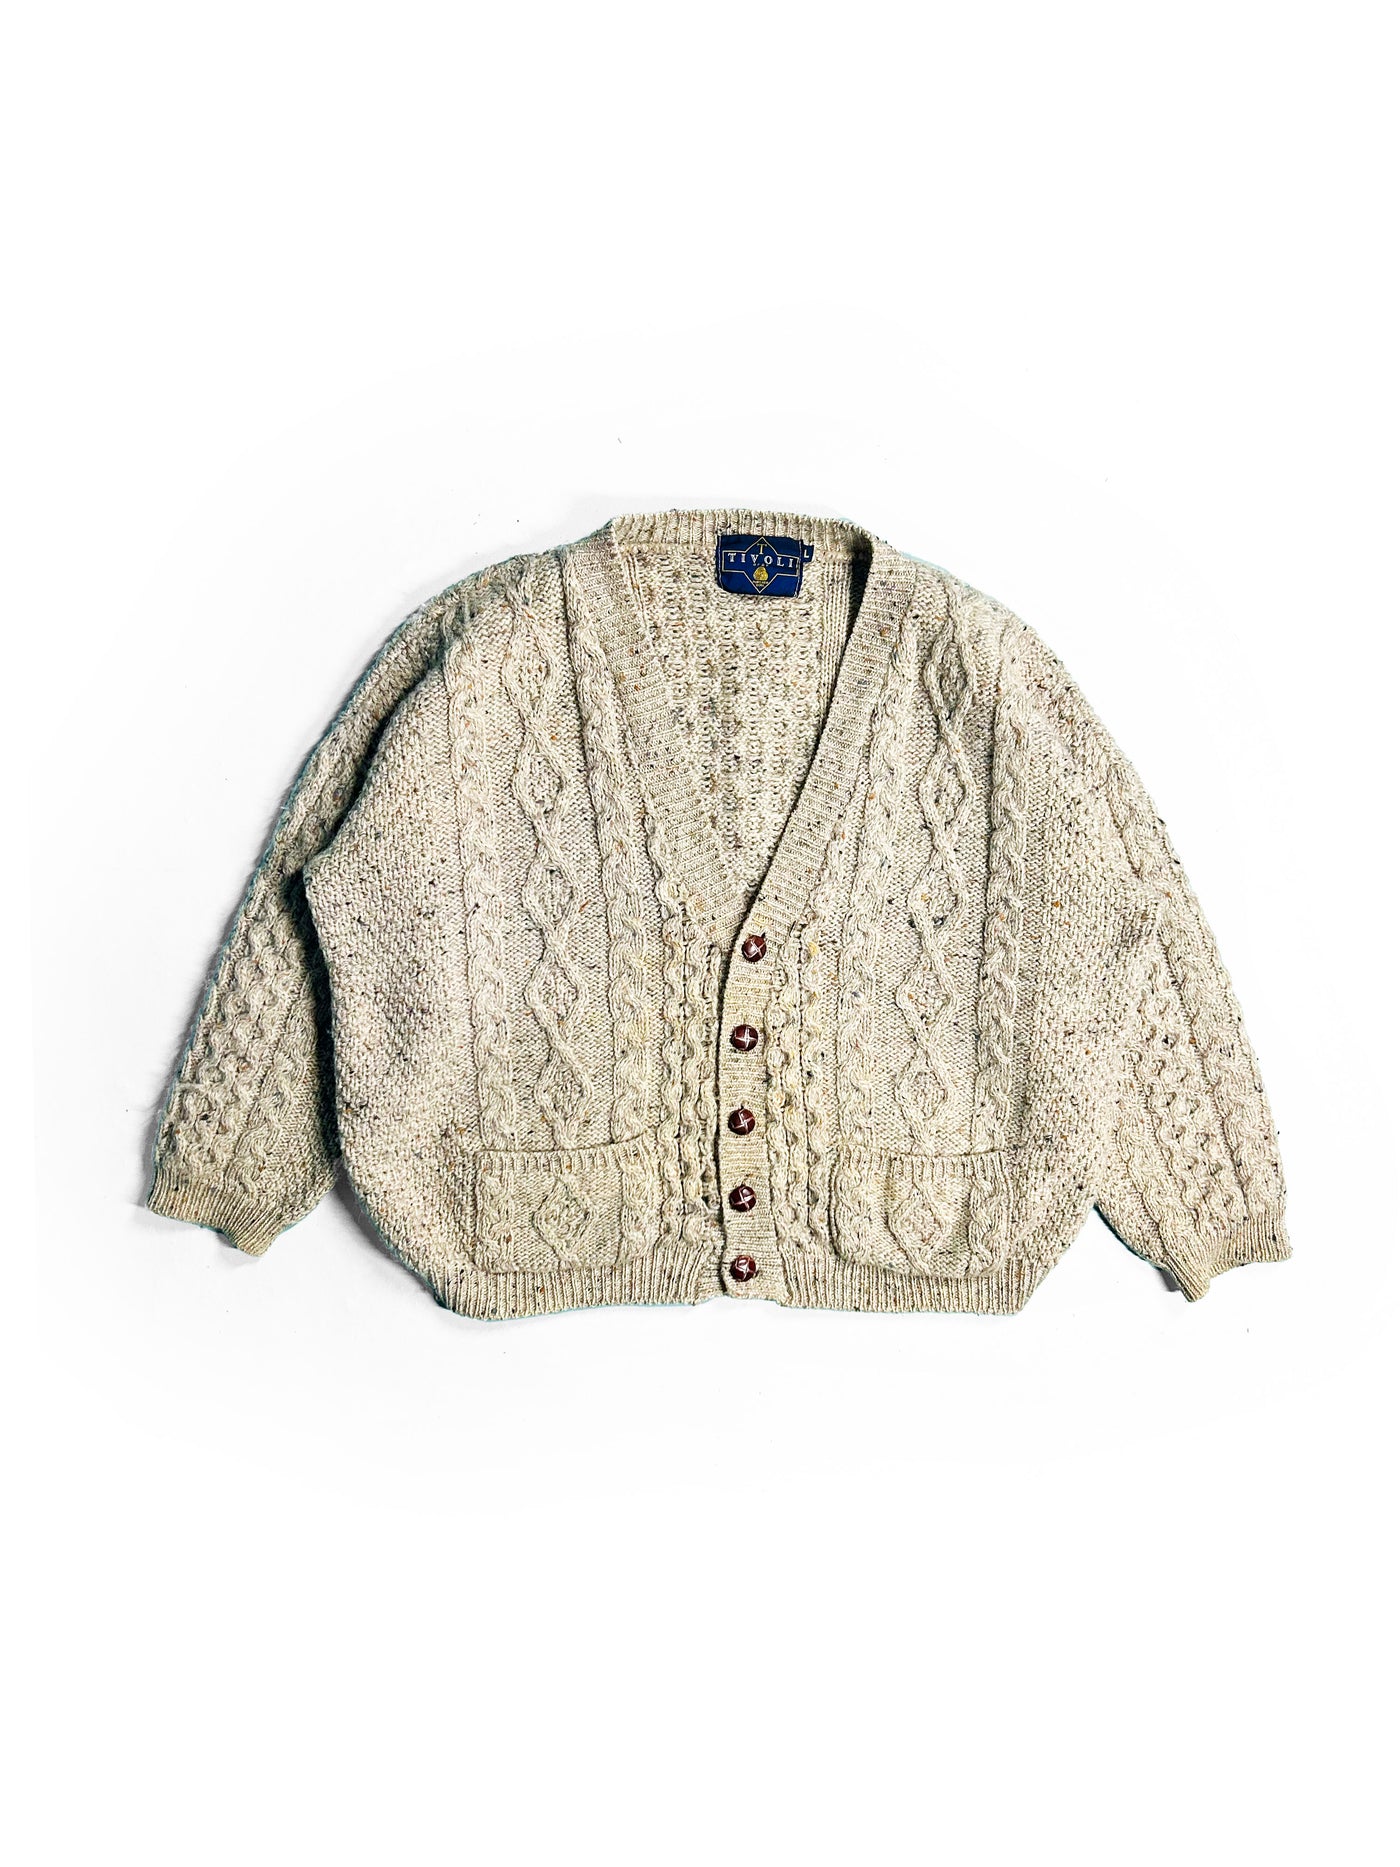 Vintage 80s Tivoli Hand Knit Cardigan